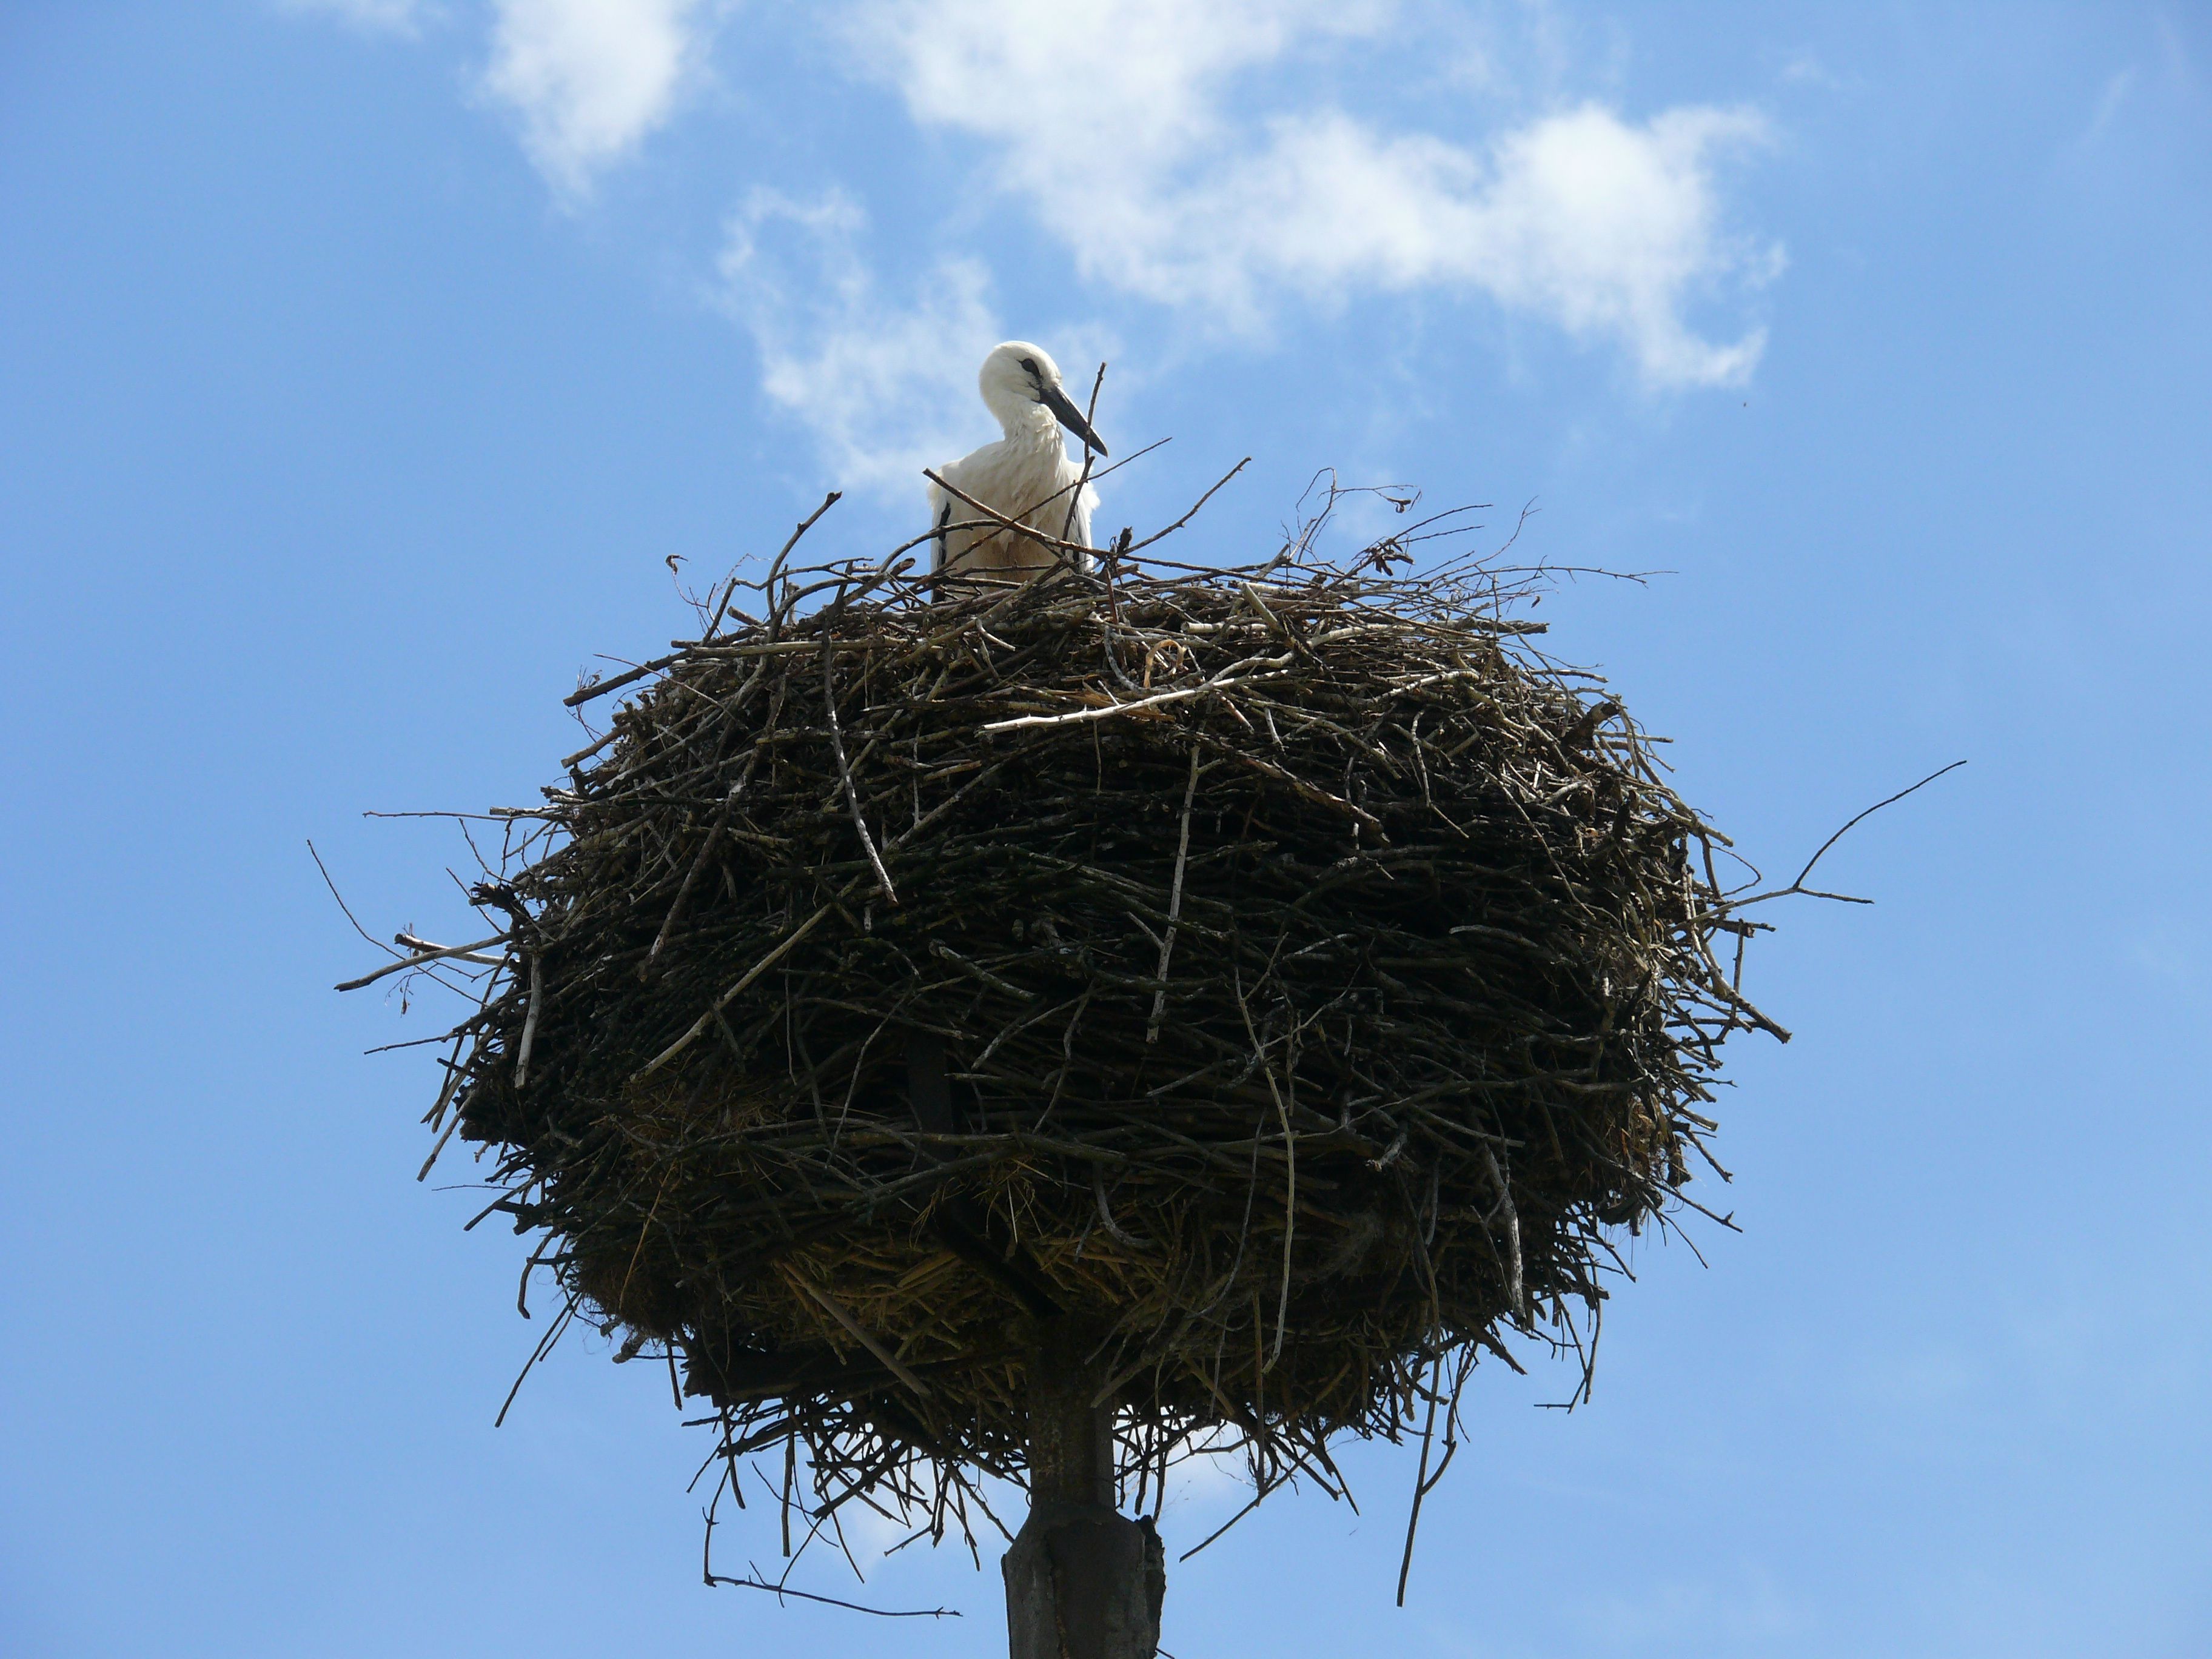 Stork nest other side of Kaski | Birds | Pinterest | Nest and Bird